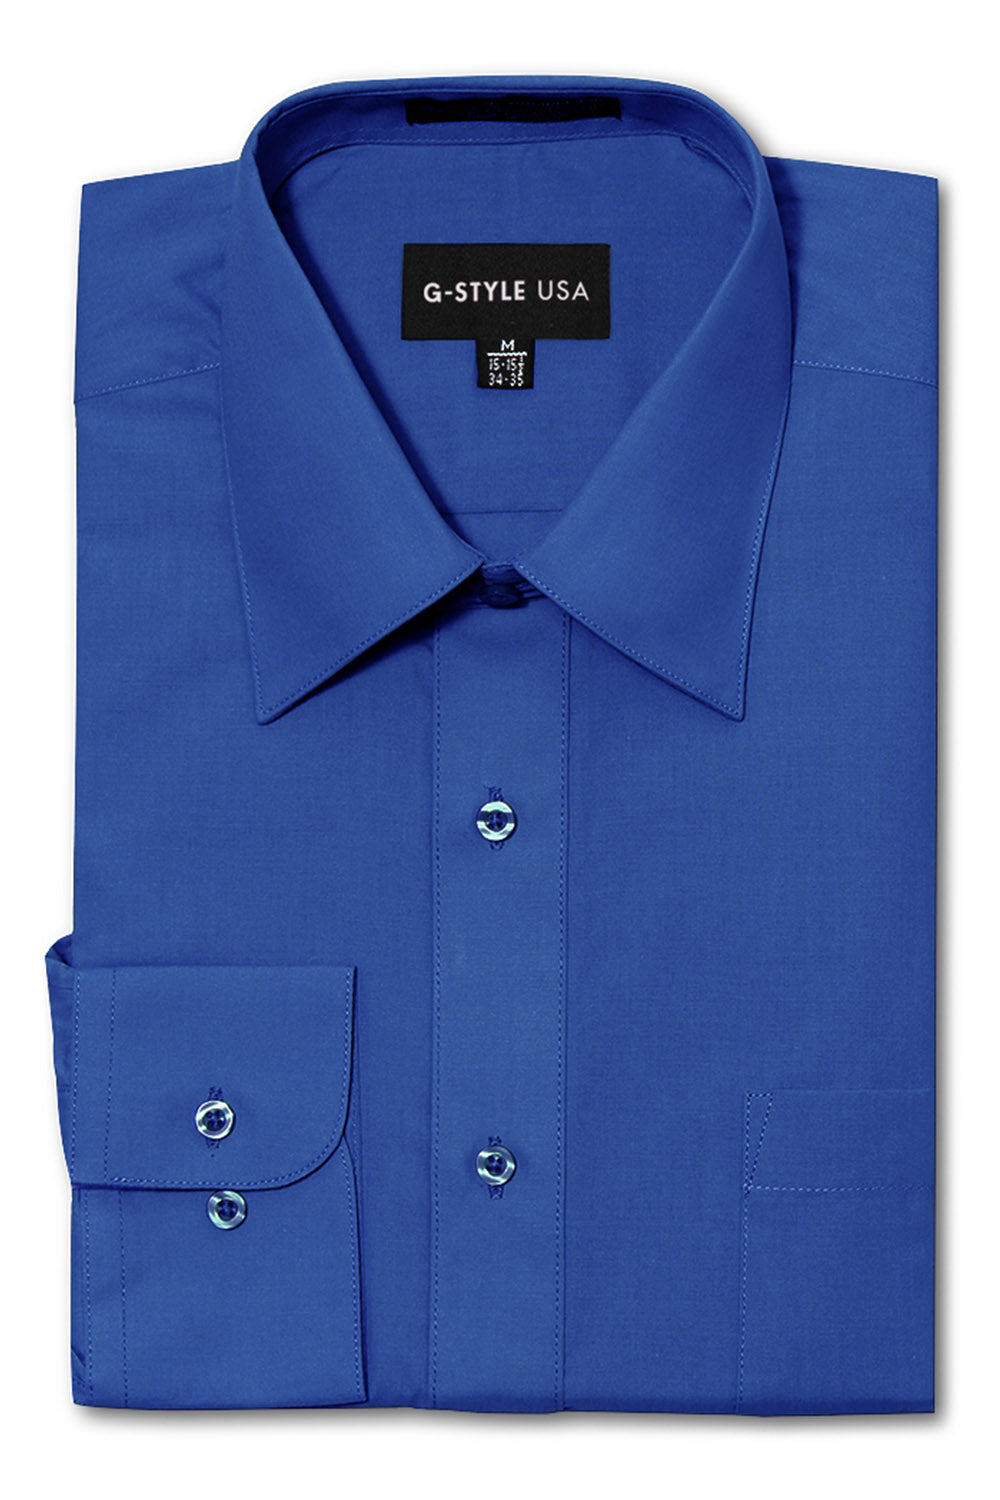 Men's Basic Solid Color Button Up Dress Shirt (Royal Blue) – G-Style USA